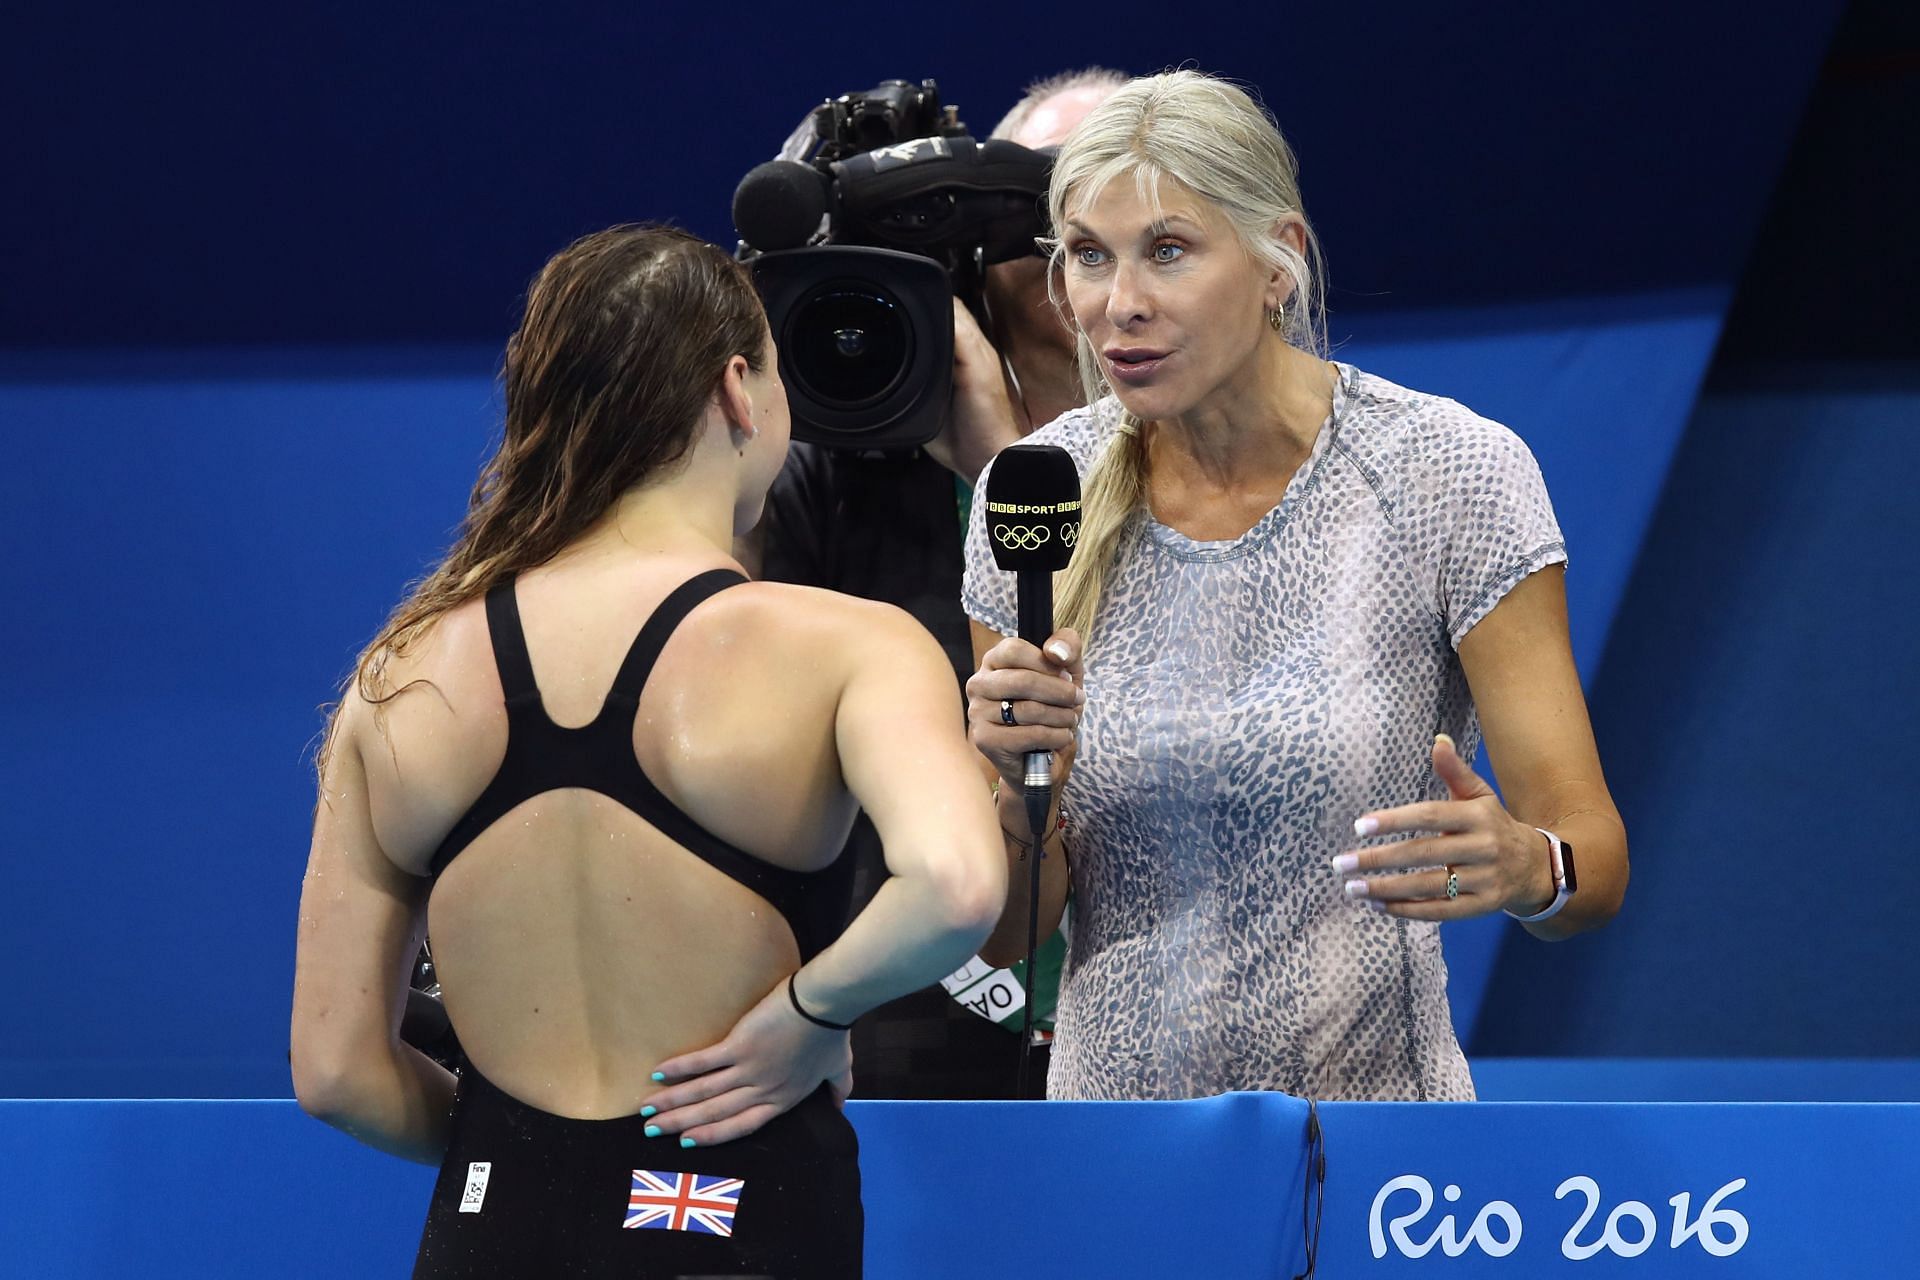 Sharron Davies (R) interviews Chloe Tutton at the 2016 Rio Olympic Games.